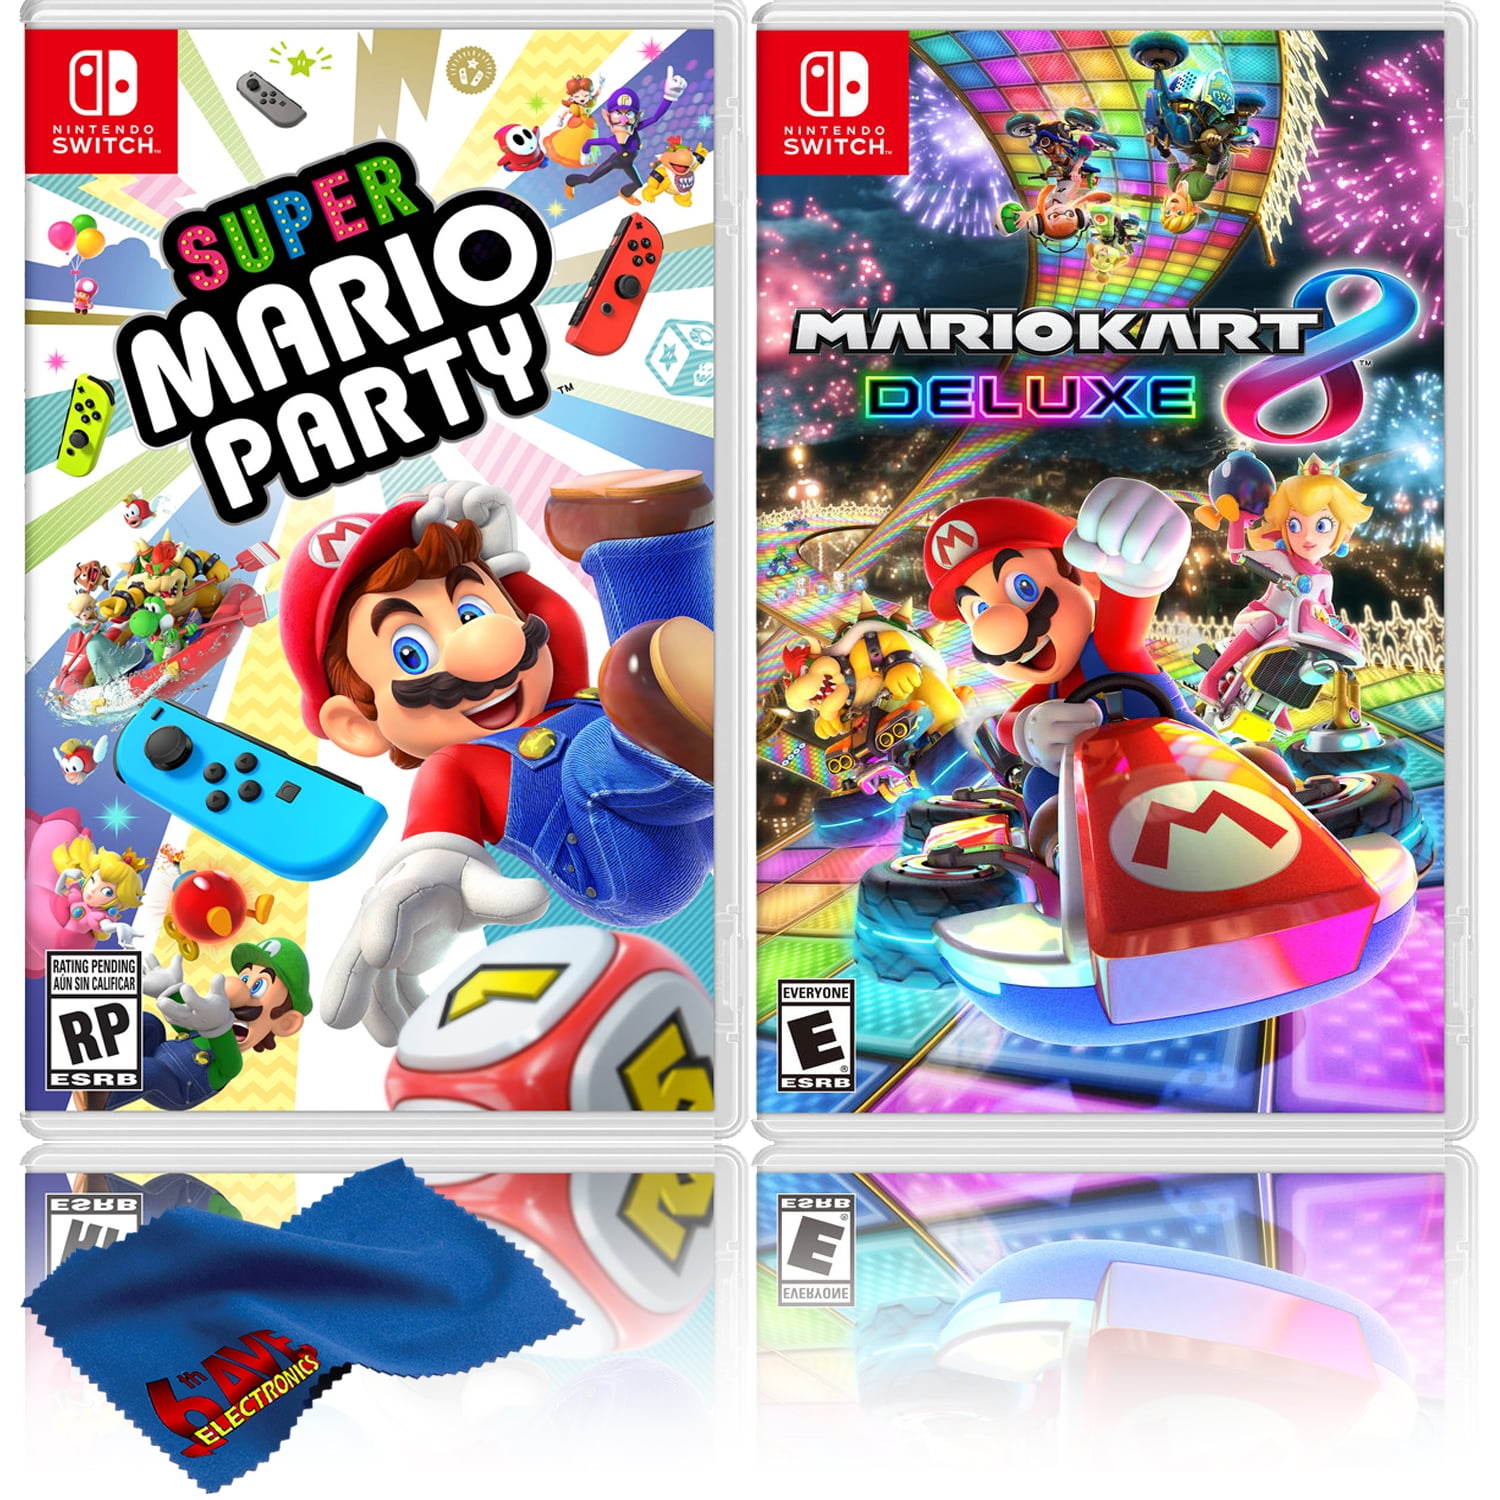 Super Mario Party + Mario Kart 8 Deluxe, Nintendo Switch - Walmart.com